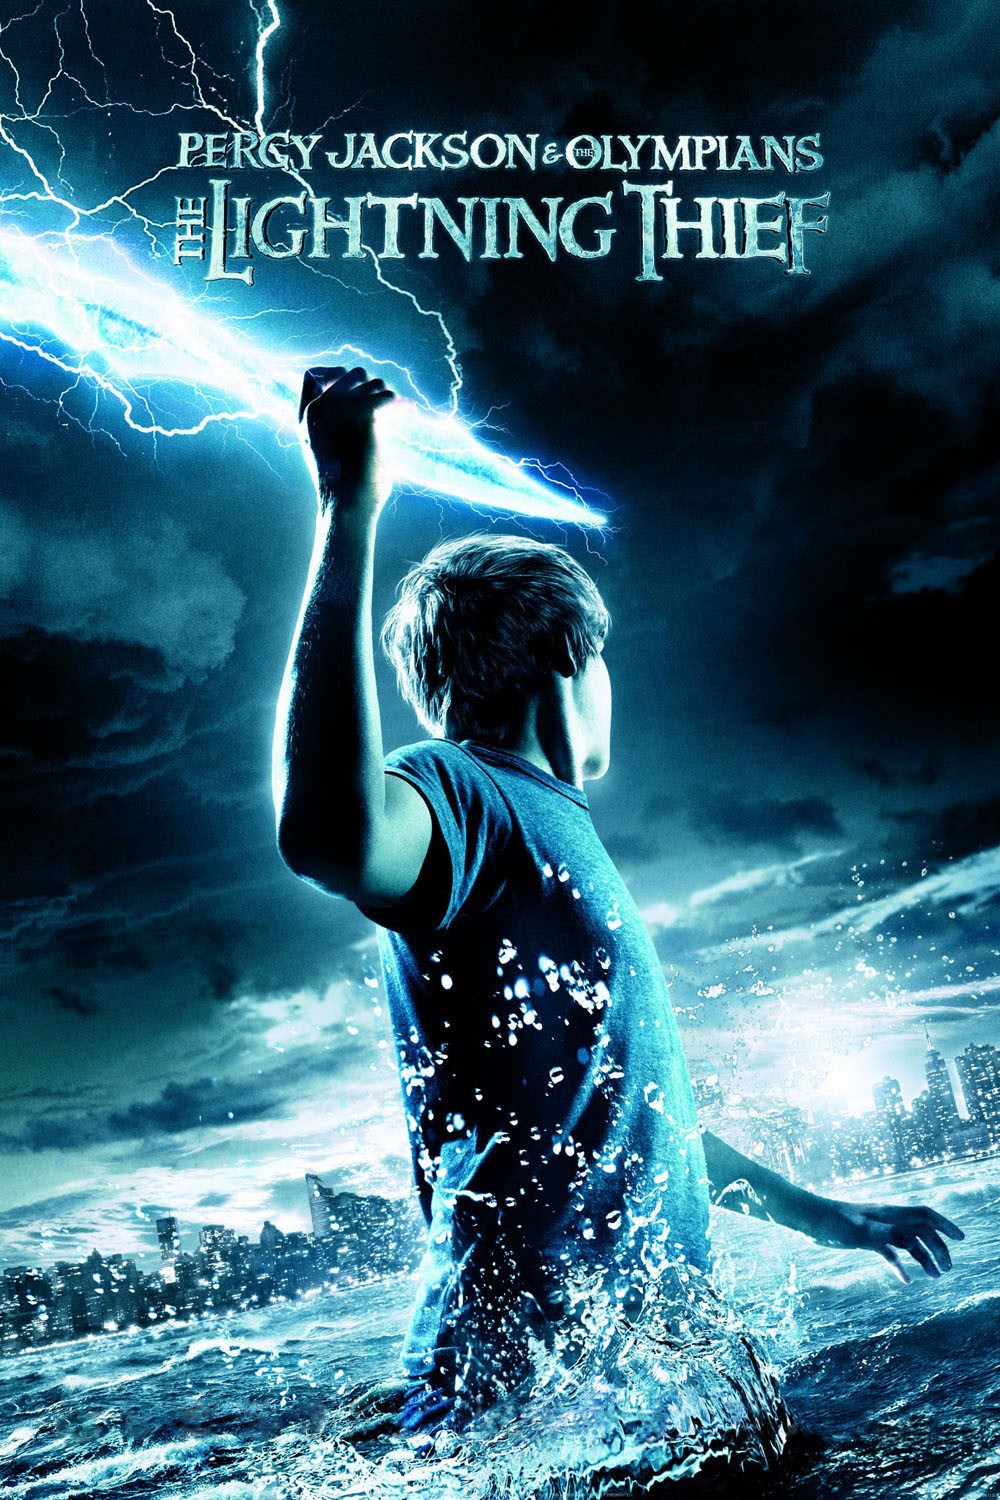 Percy jackson & the olympians: the lightning thief 2010